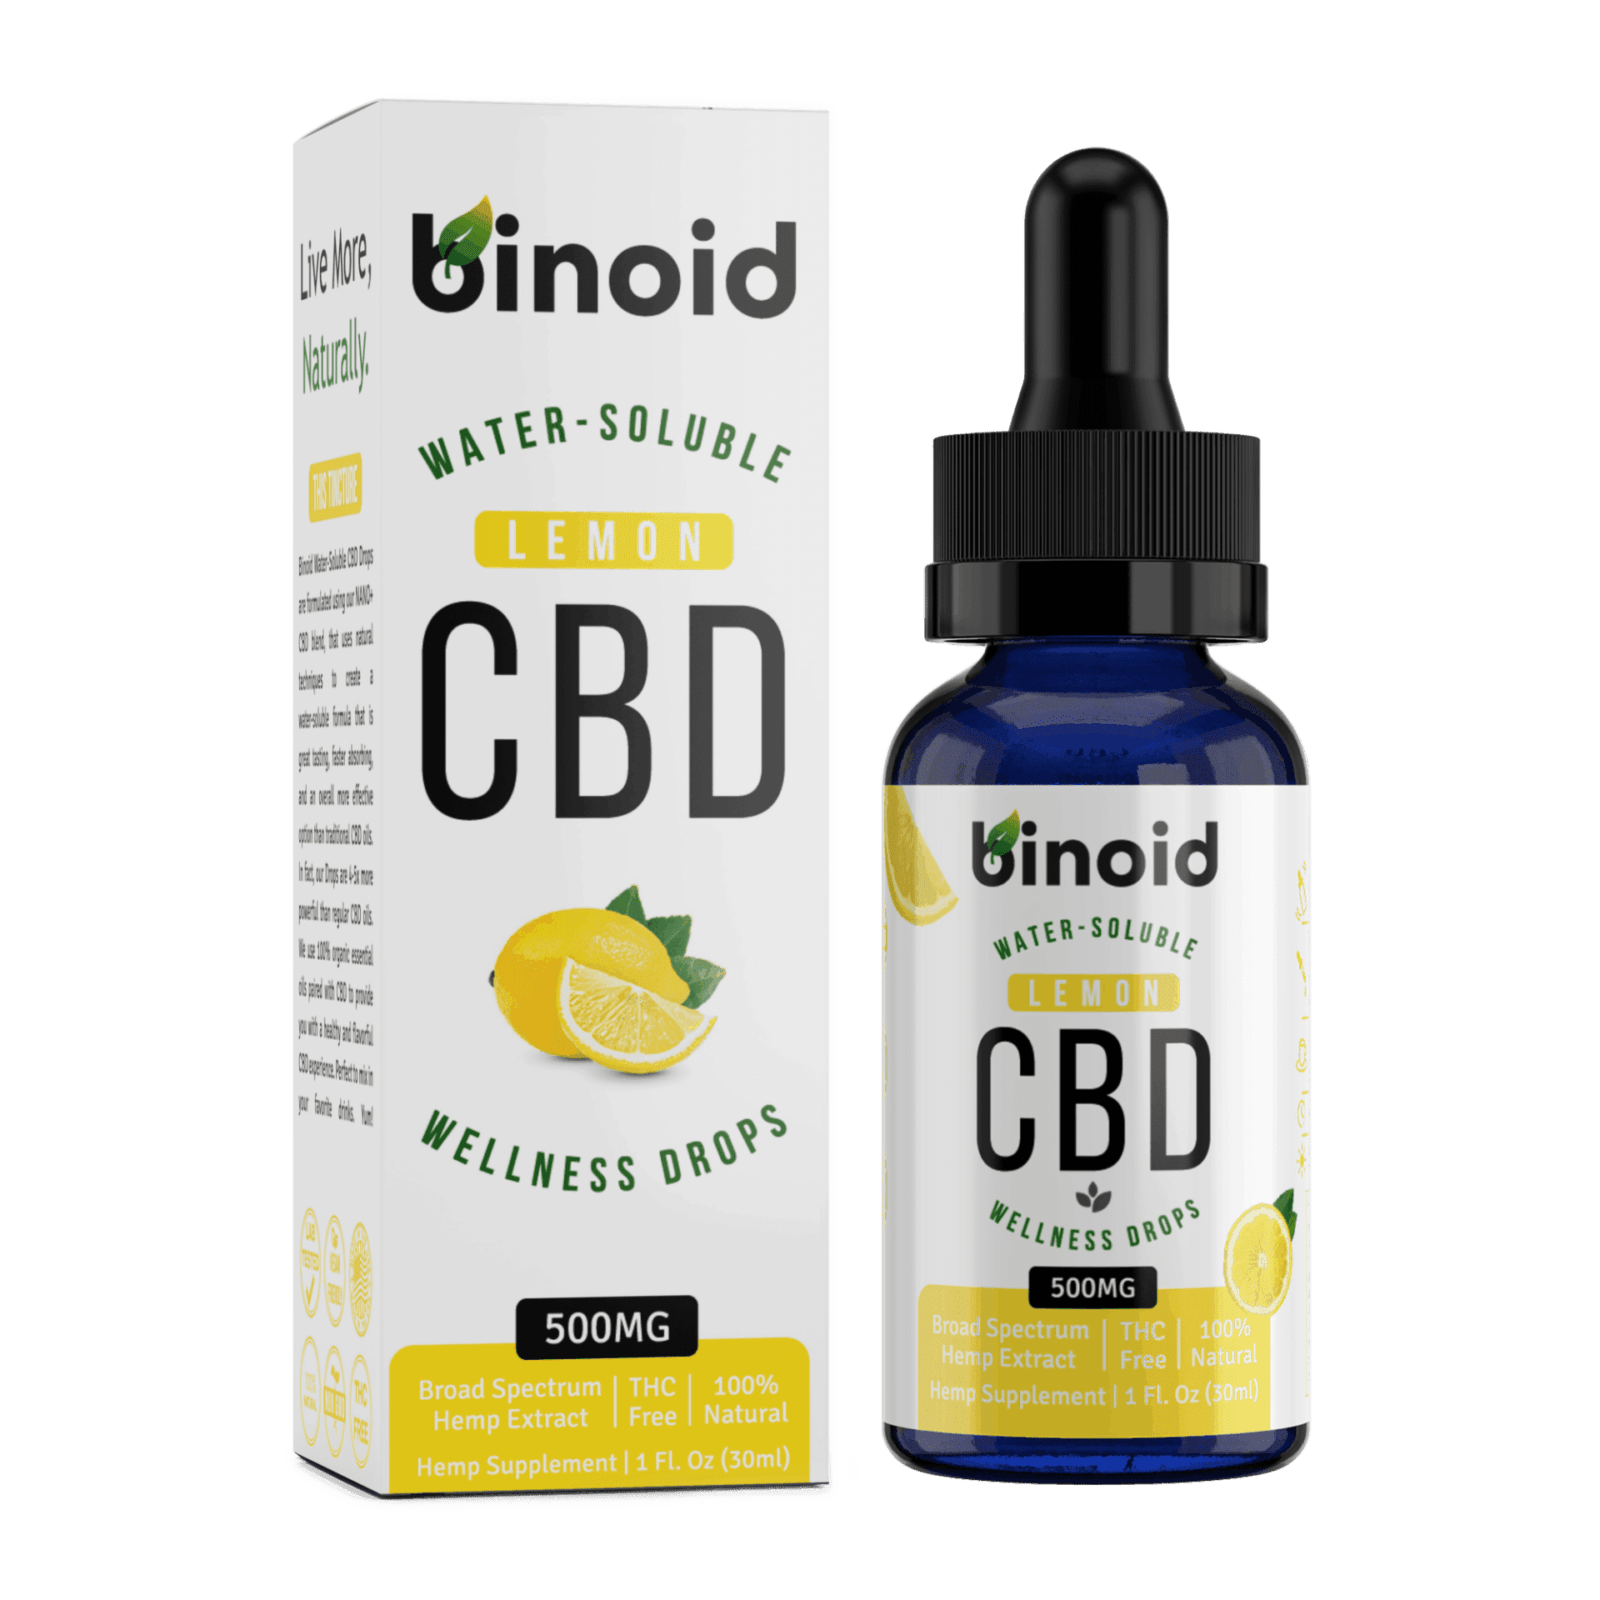 Binoid Water-Soluble CBD Drops - Lemon box and bottle image